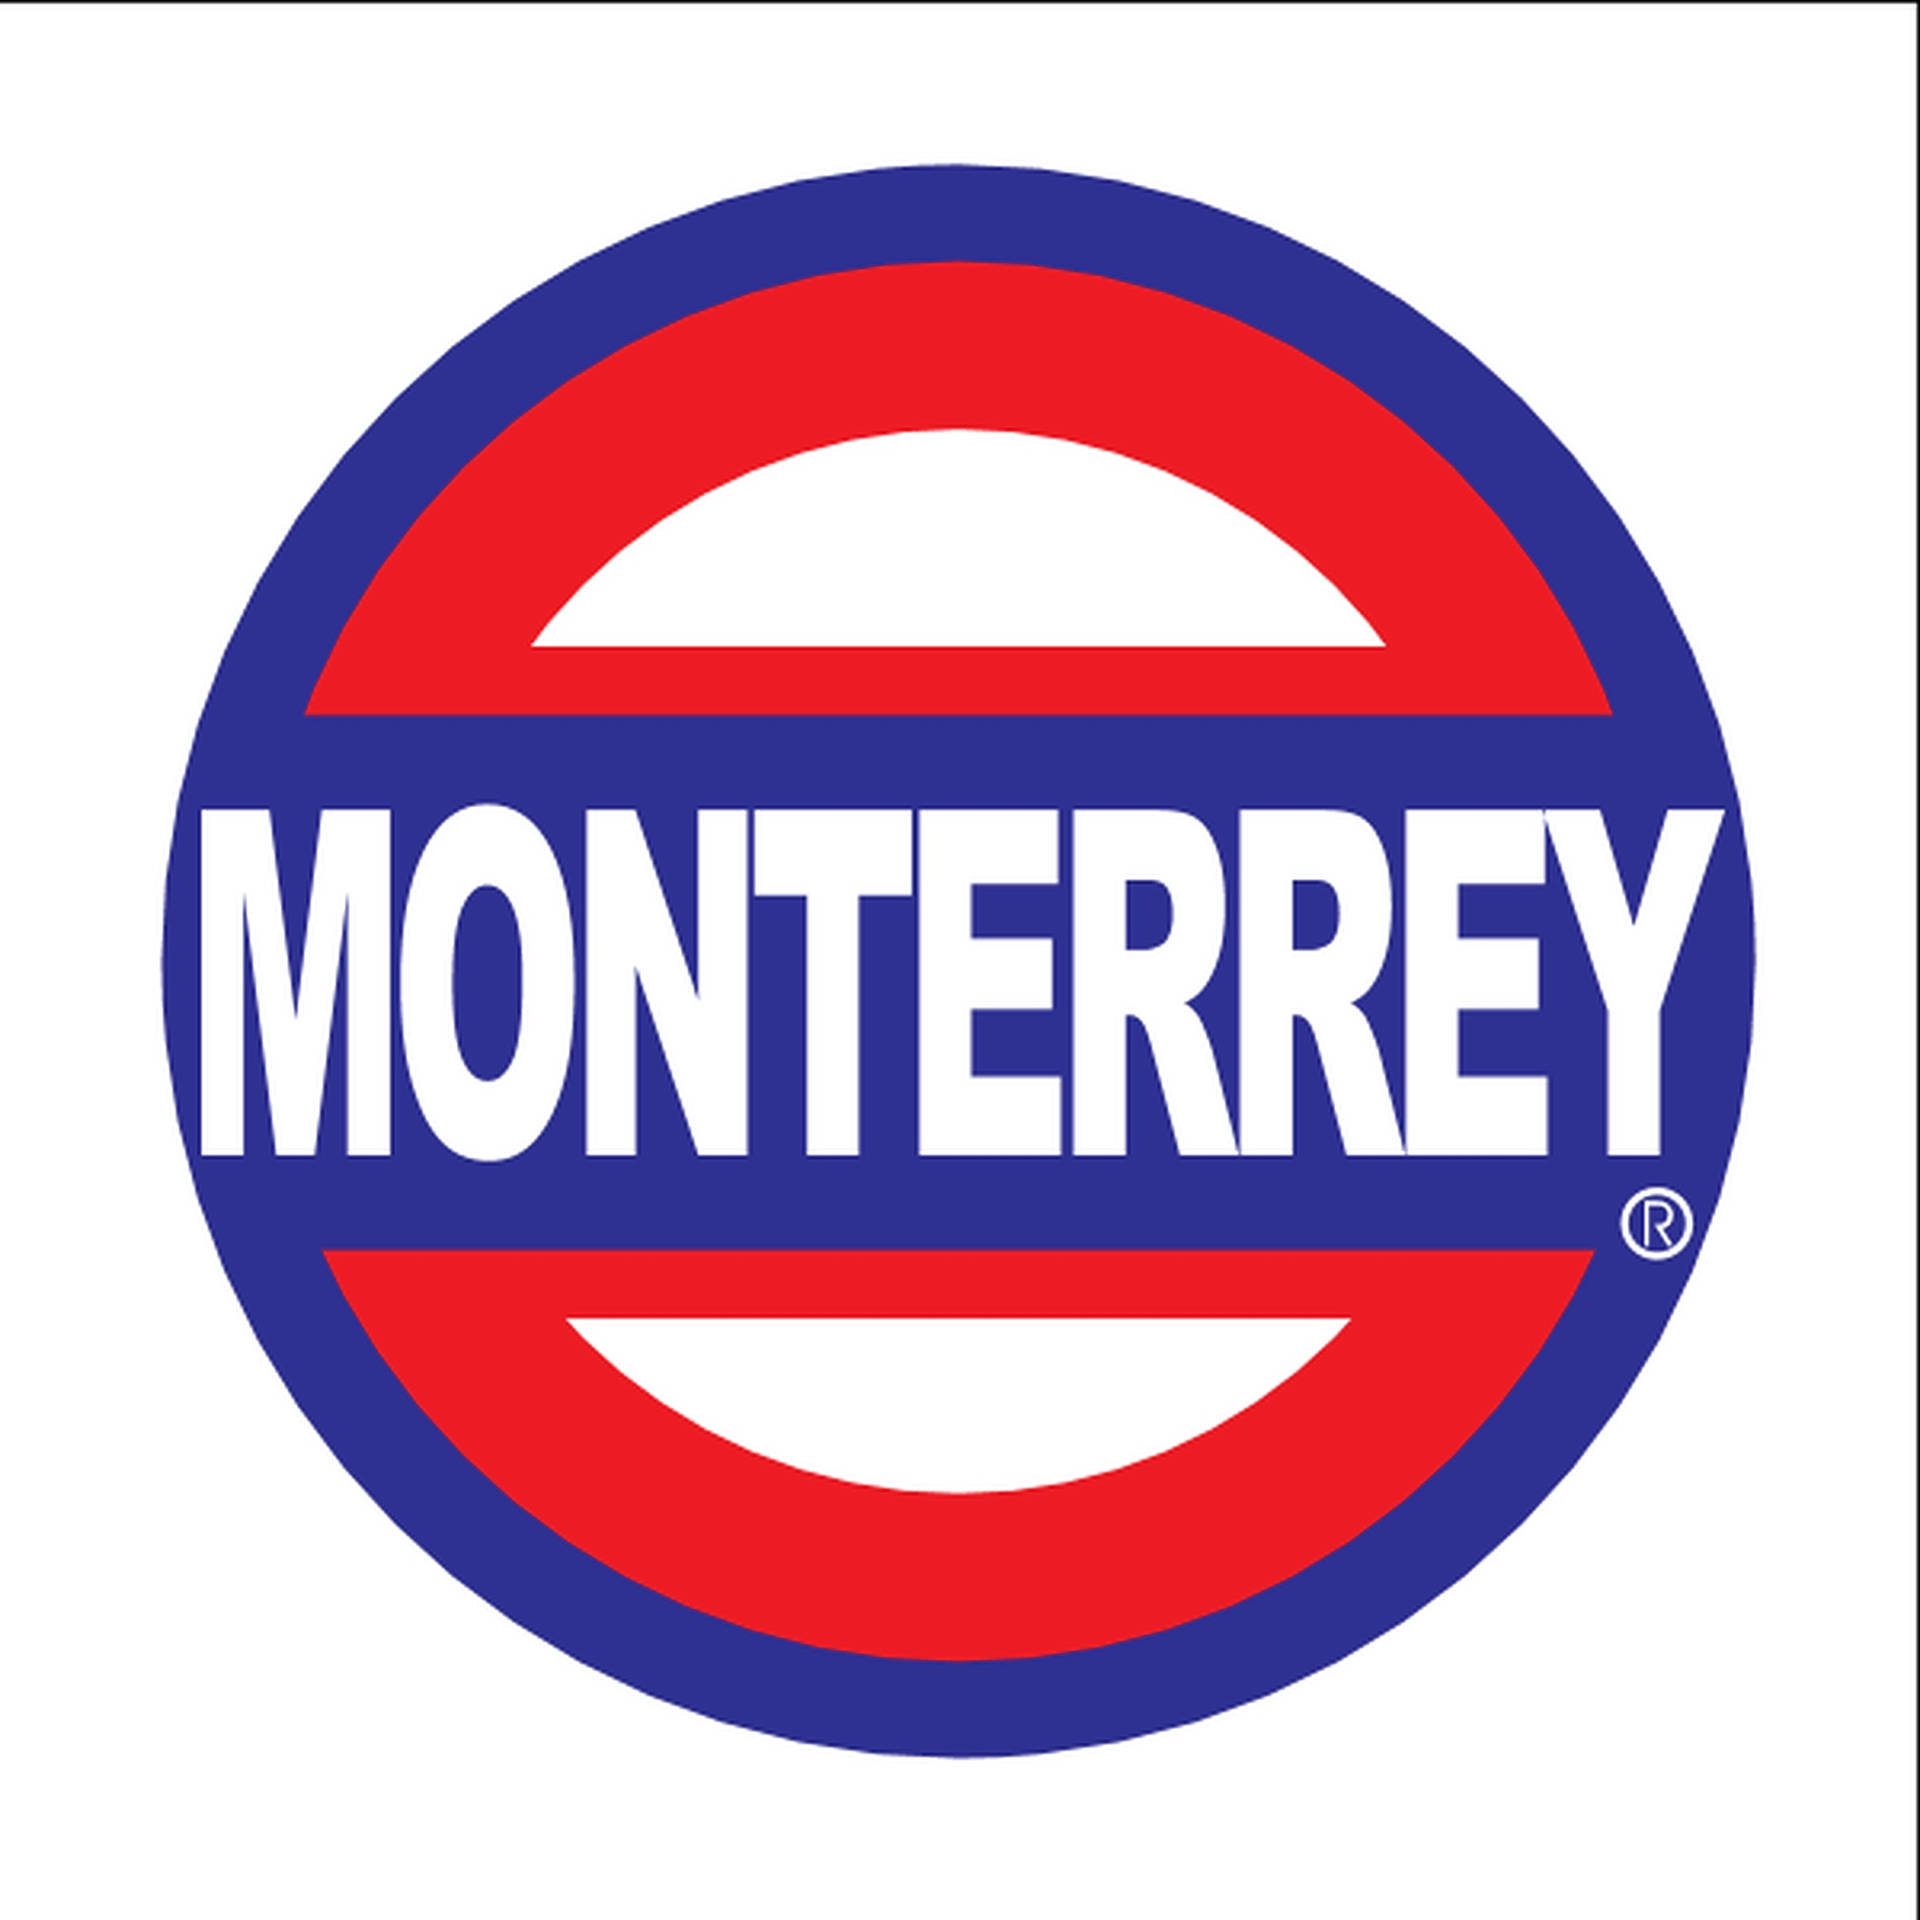 Monterrey Red Sign Wallpaper